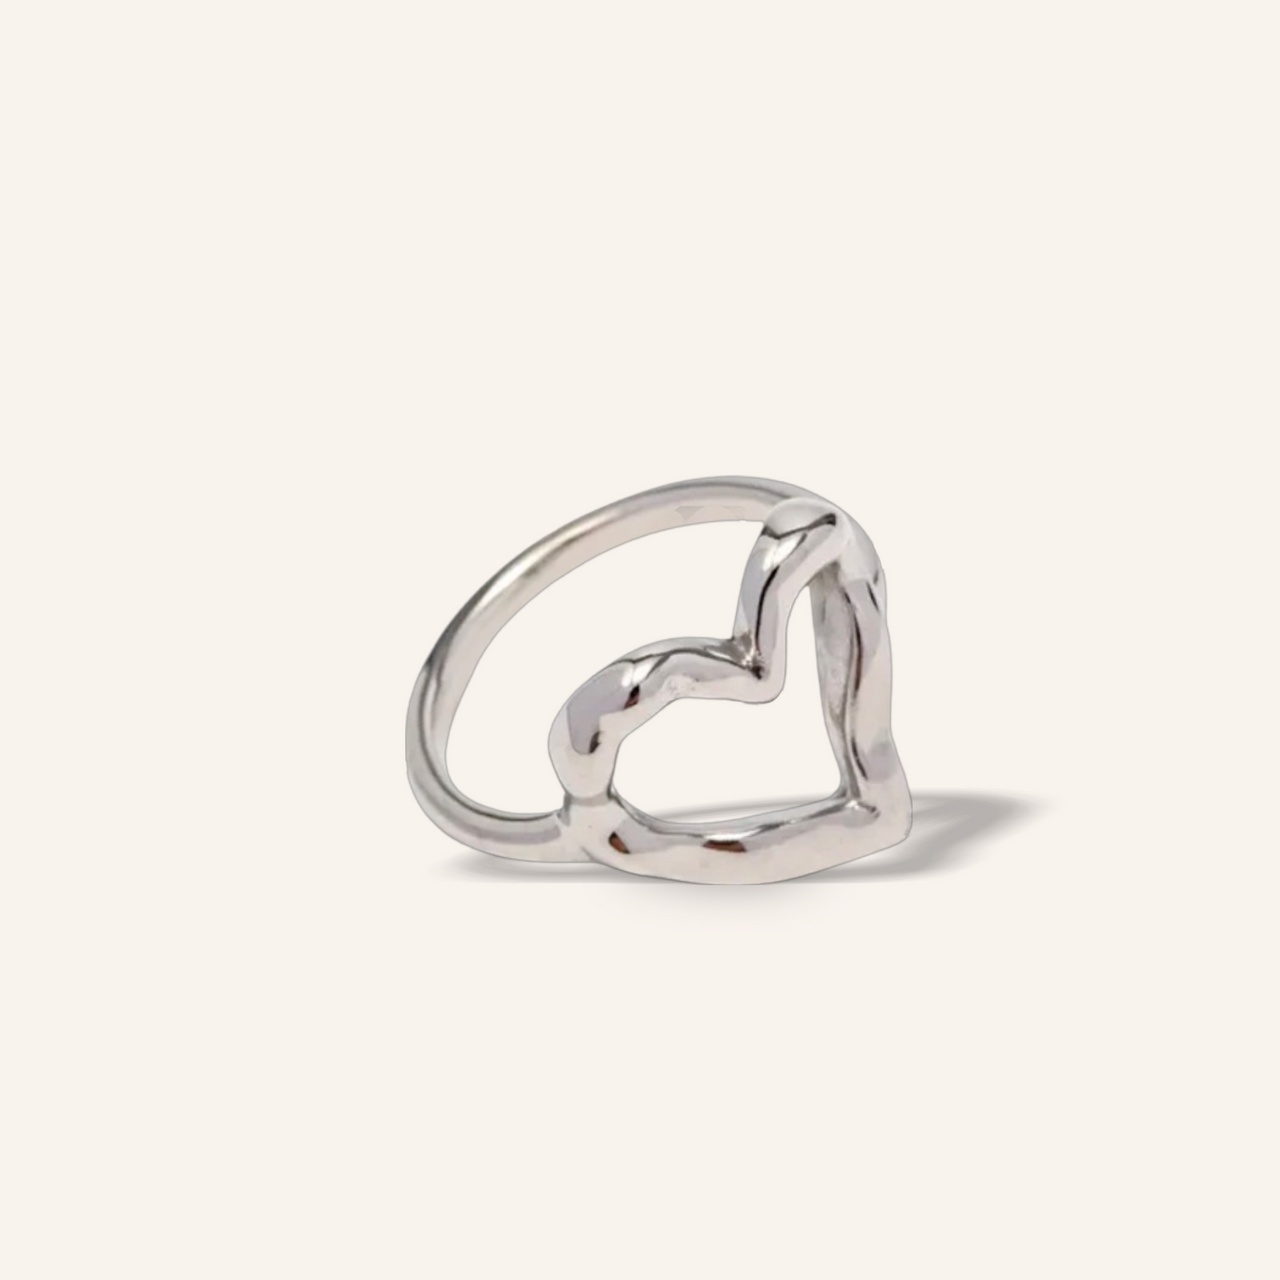 Wanda silver ring